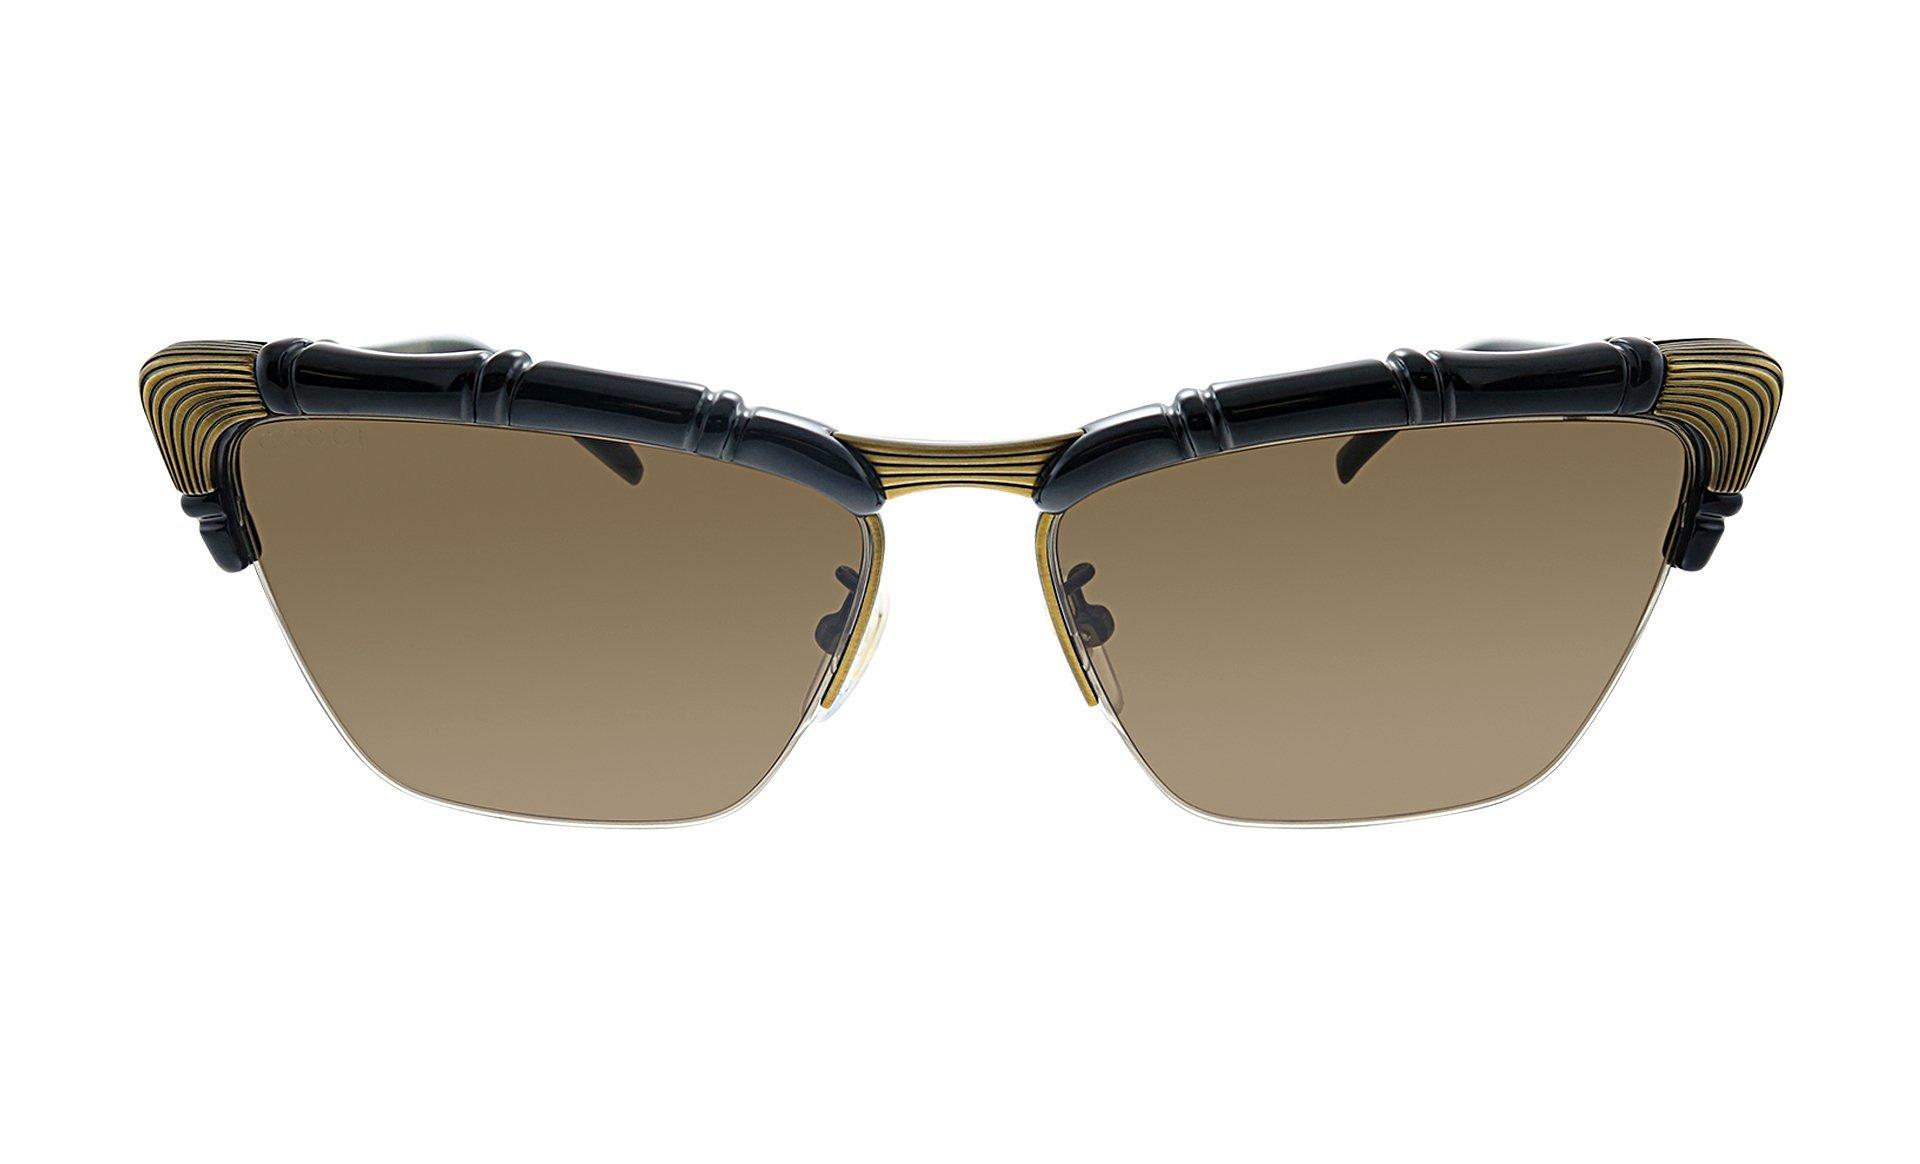 Gucci Bamboo-effect Cat-eye Sunglasses in Black Gold/Brown (Black 